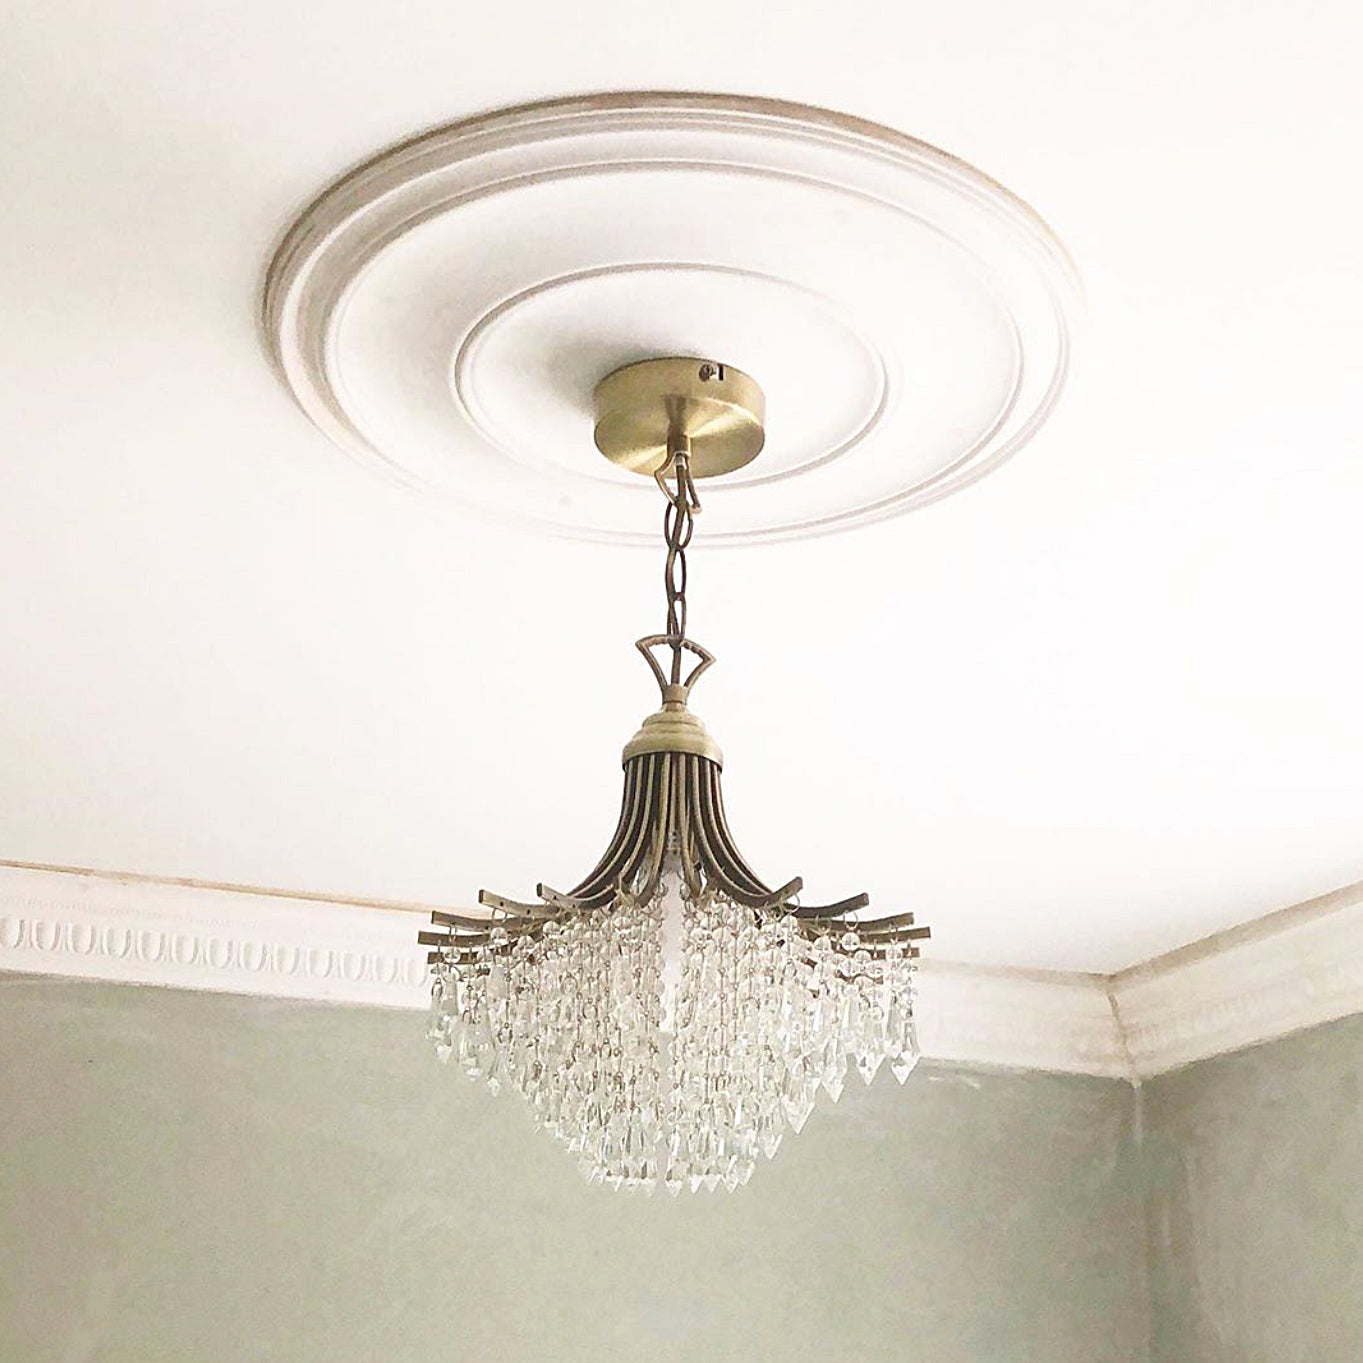 Plain Spun Plaster Ceiling Rose with chandelier